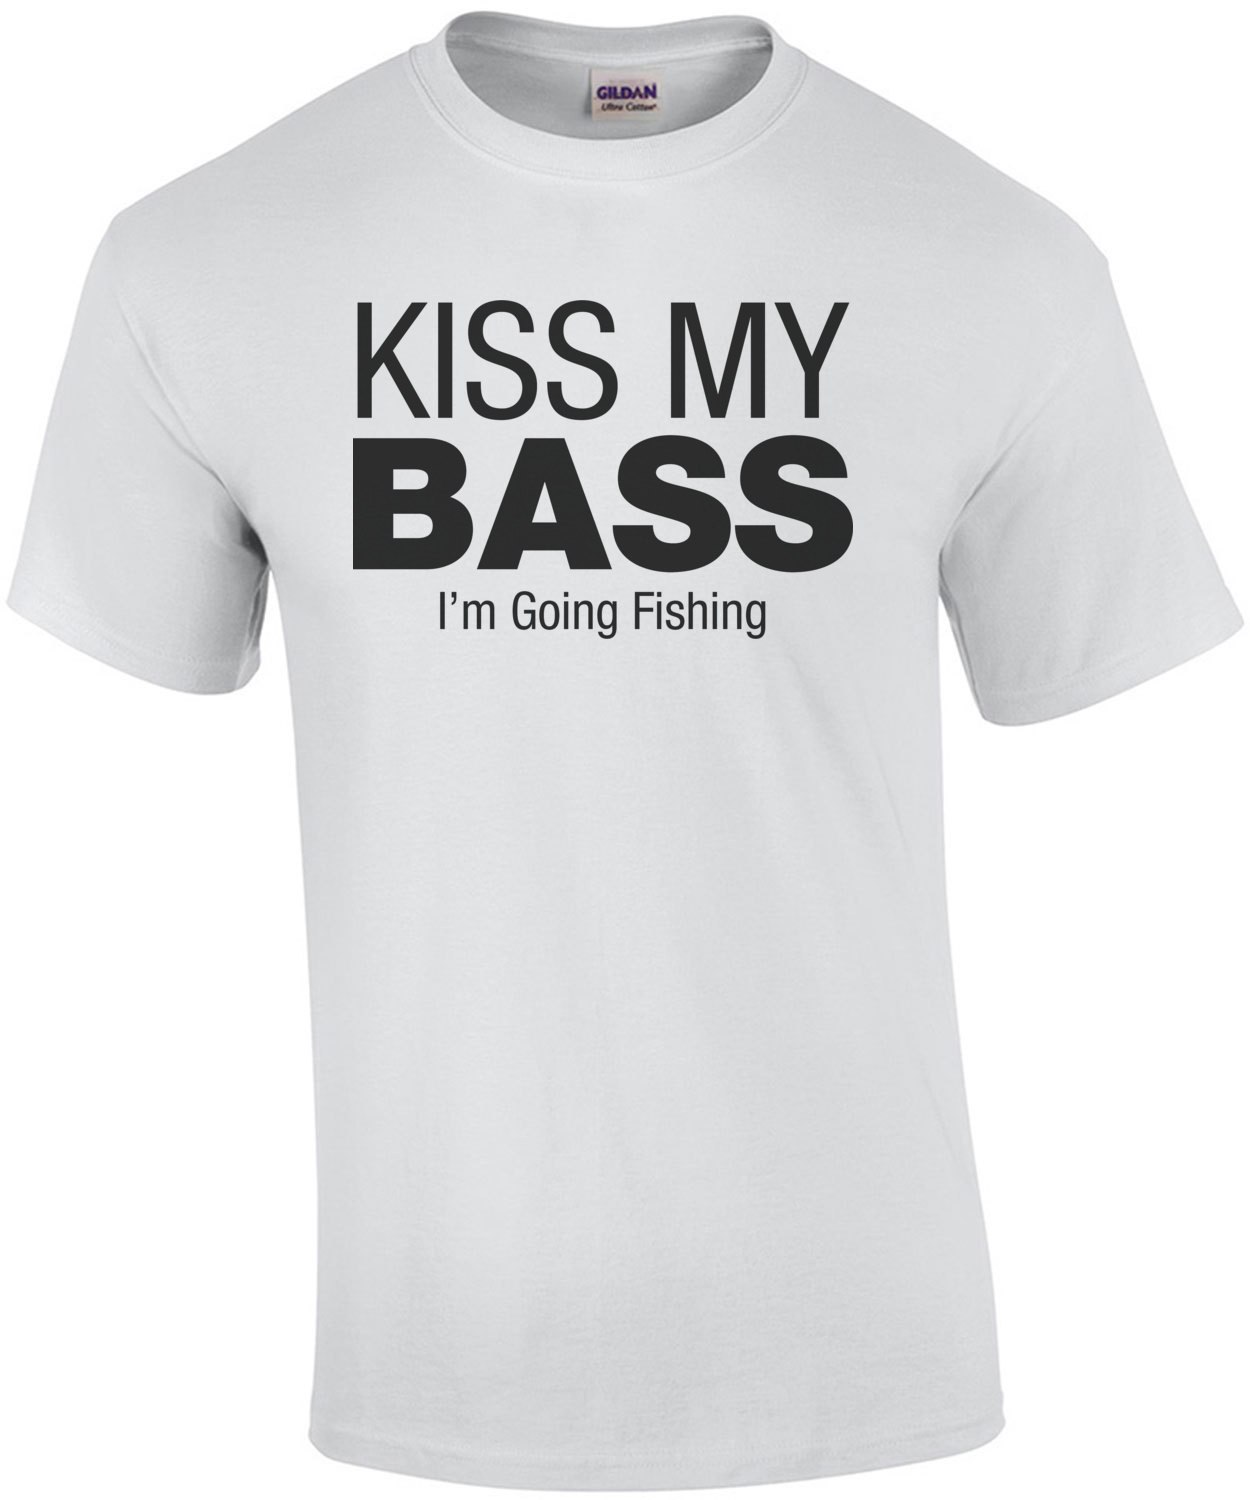 Kiss My Bass, I'm Going Fishing - Fisherman T-Shirt